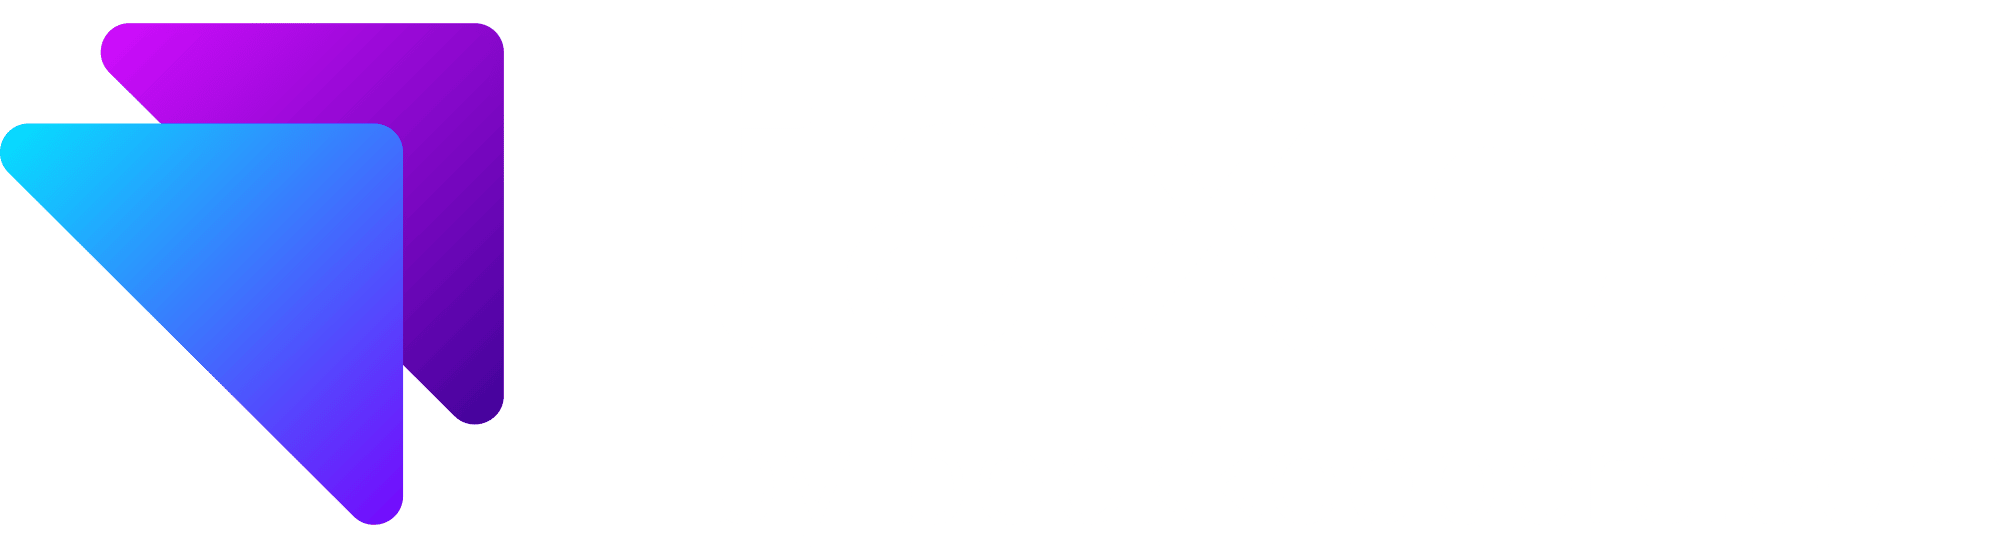 TaxBiz by bookkeepers Logo (White Text)